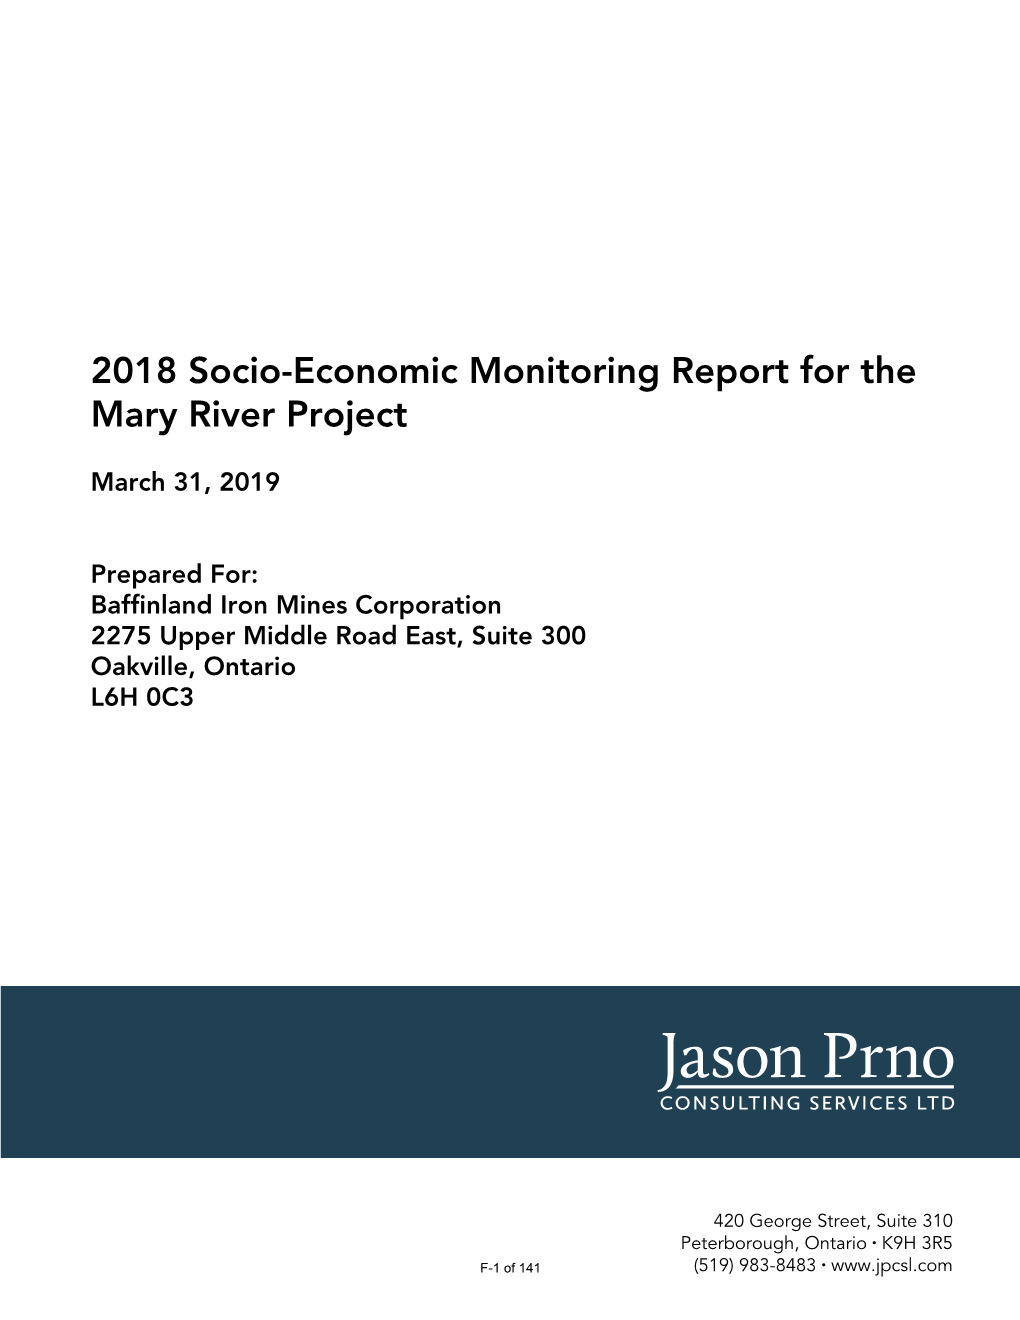 2018 Socio-Economic Monitoring Report for the Mary River Project